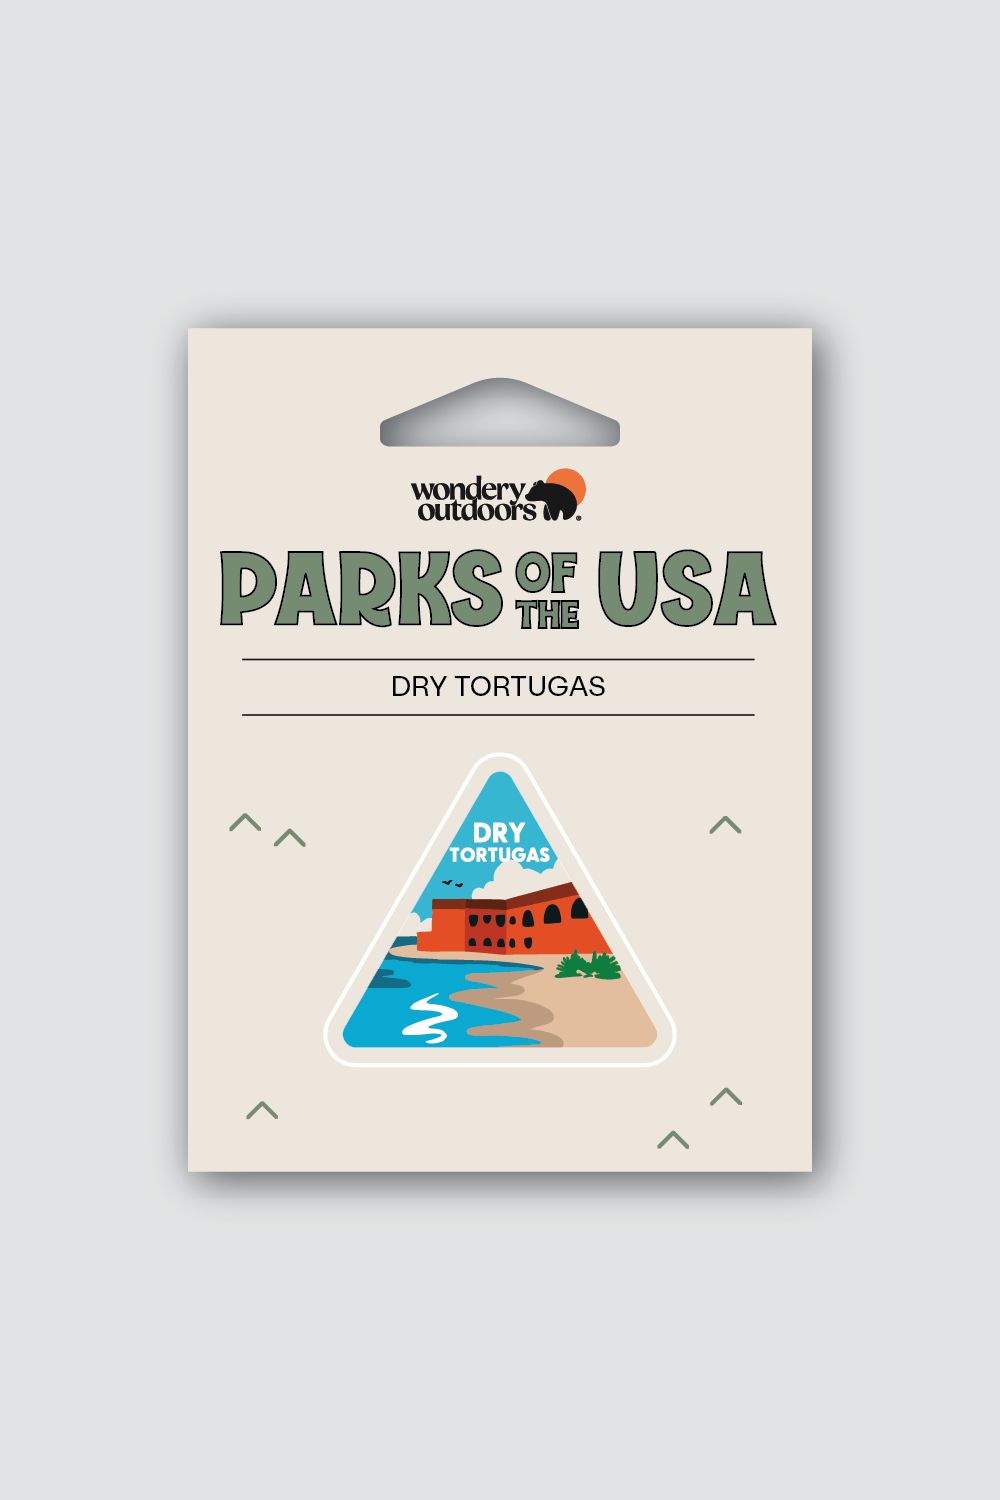 #national park_dry tortugas _USA National Parks souvenir sticker gift sets